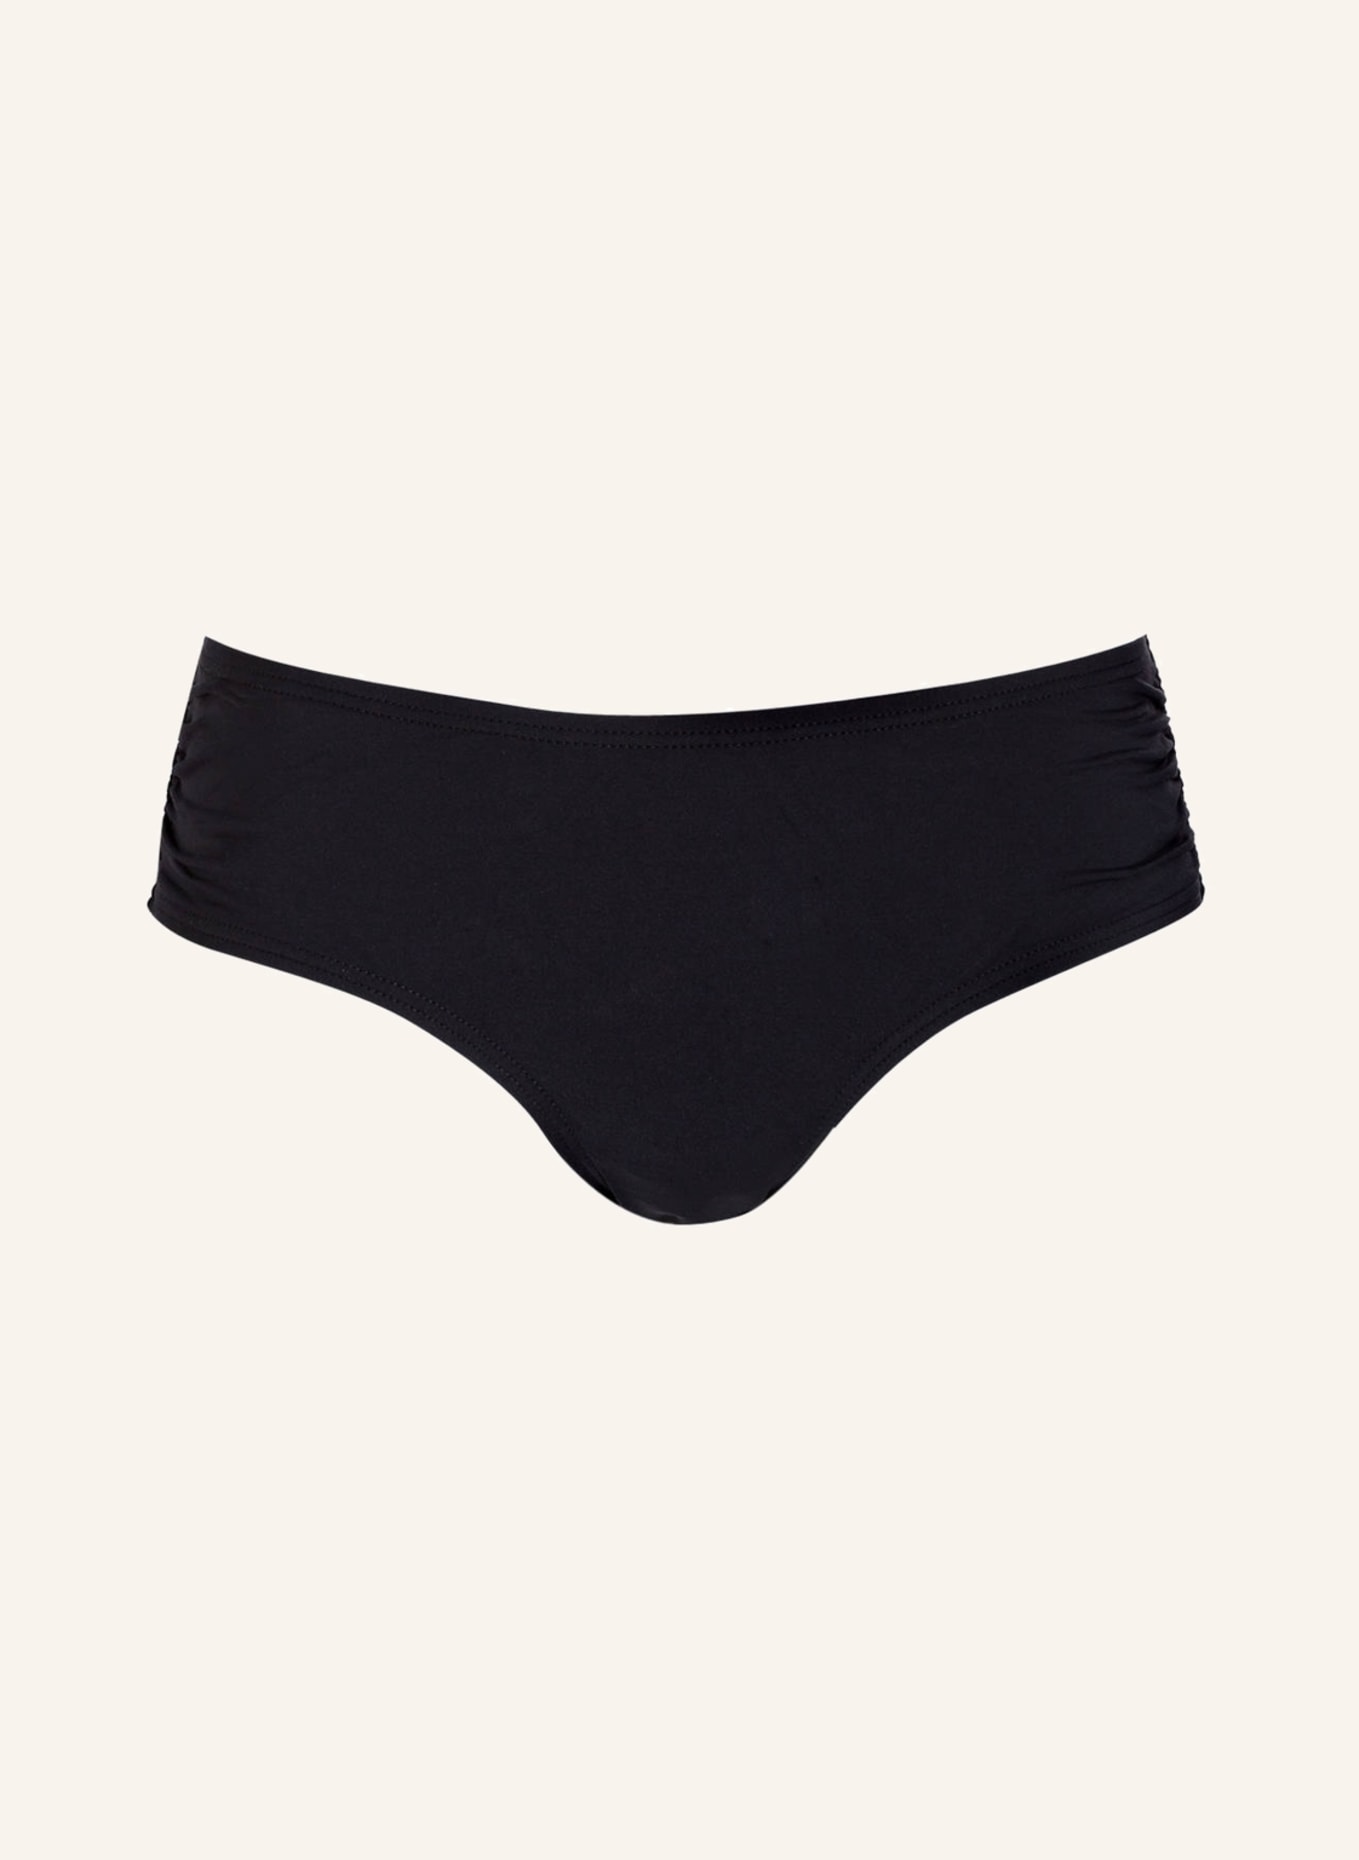 MICHAEL KORS Panty-Bikini-Hose ICONIC SOLIDS, Farbe: SCHWARZ (Bild 1)